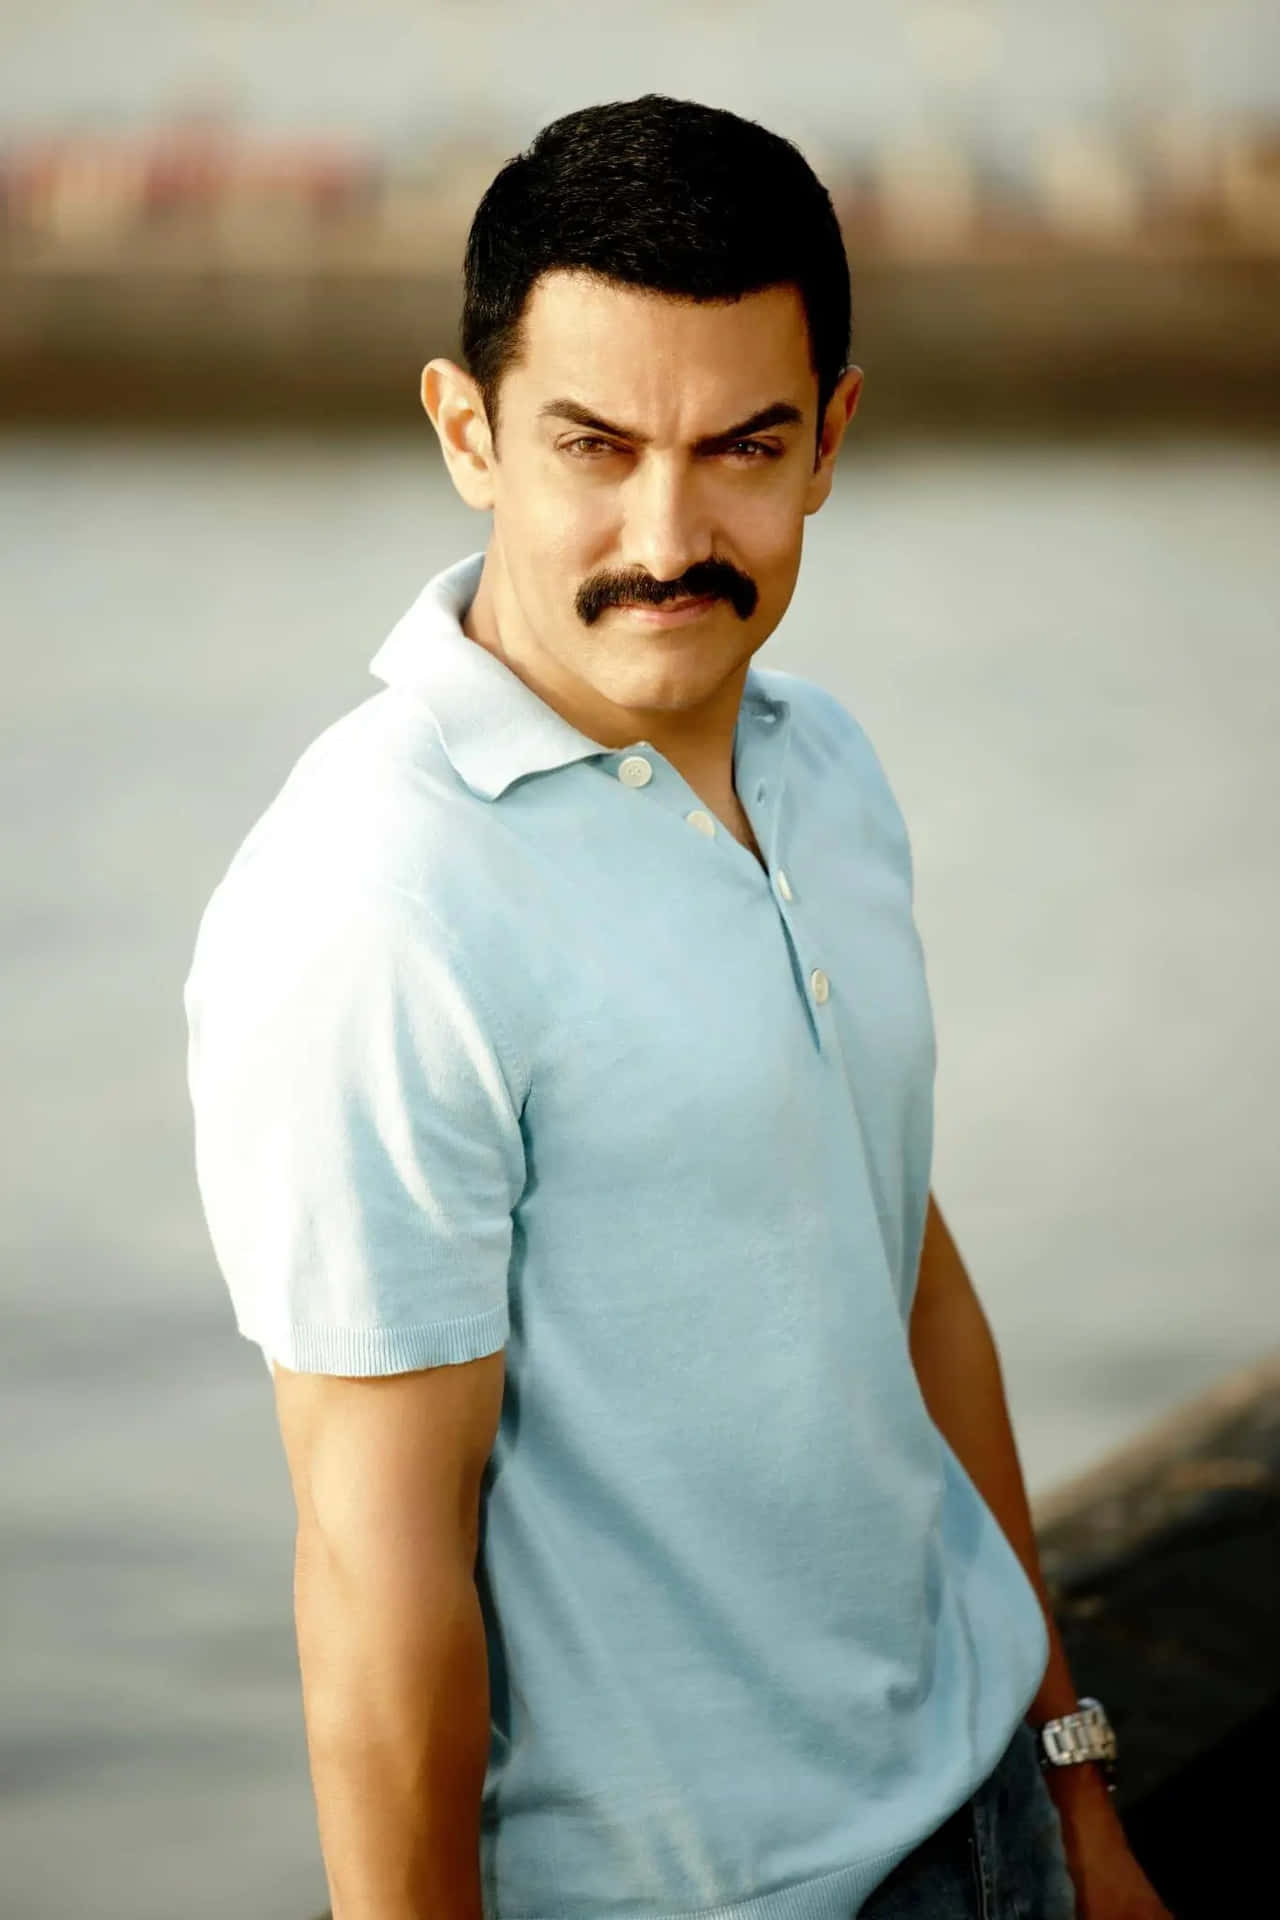 Actor Aamir Khan Strikes a Pose at a Photo Shoot